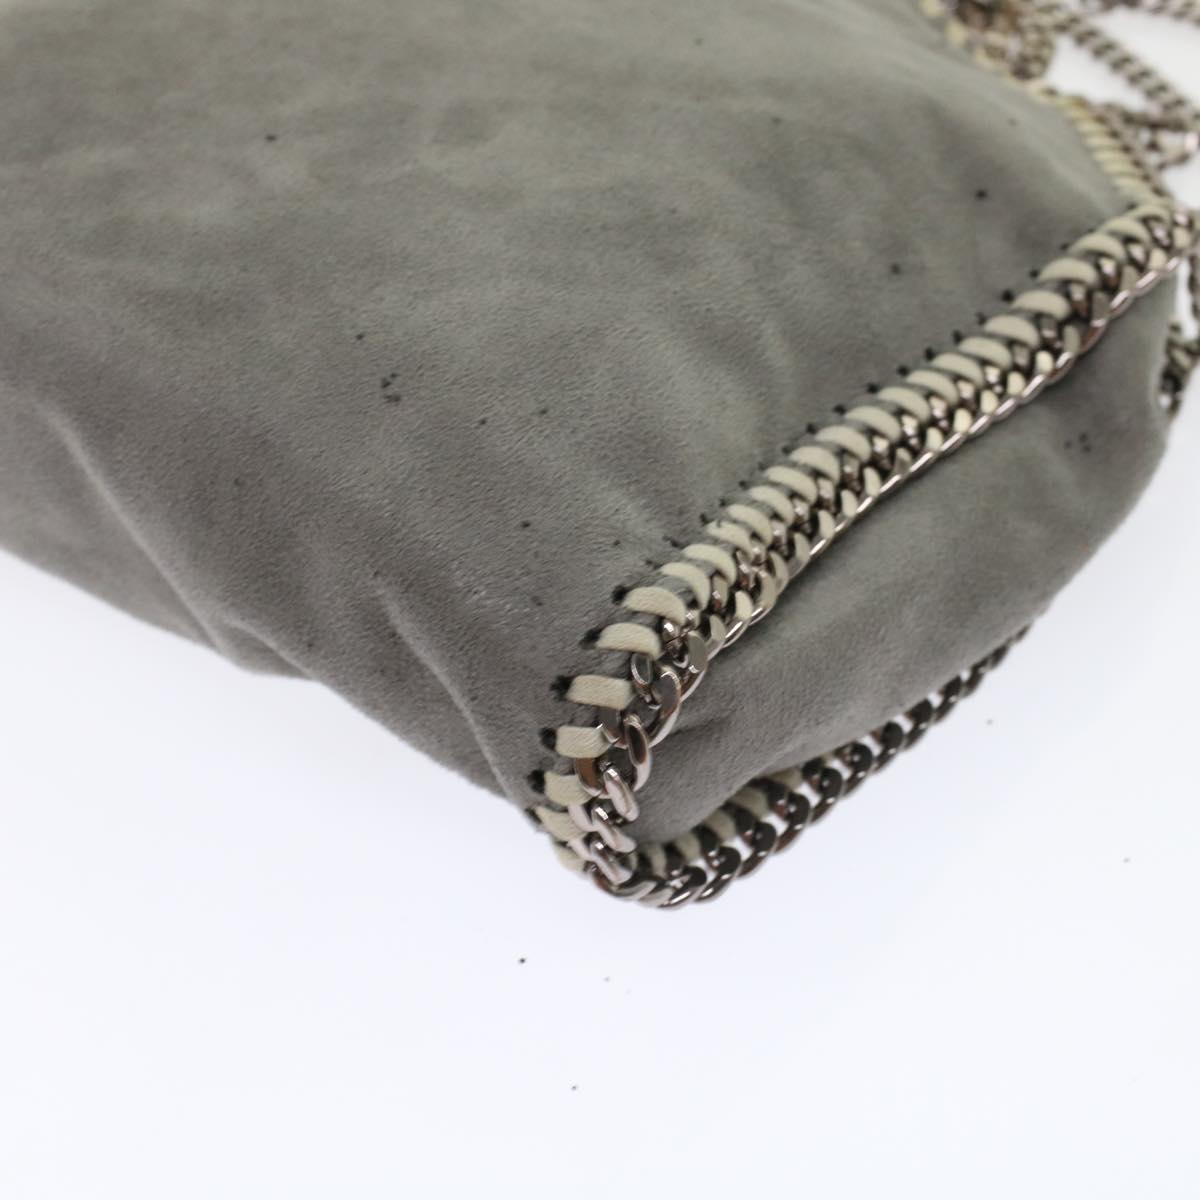 Stella MacCartney Chain Falabella Shoulder Bag Suede Gray Auth bs7170